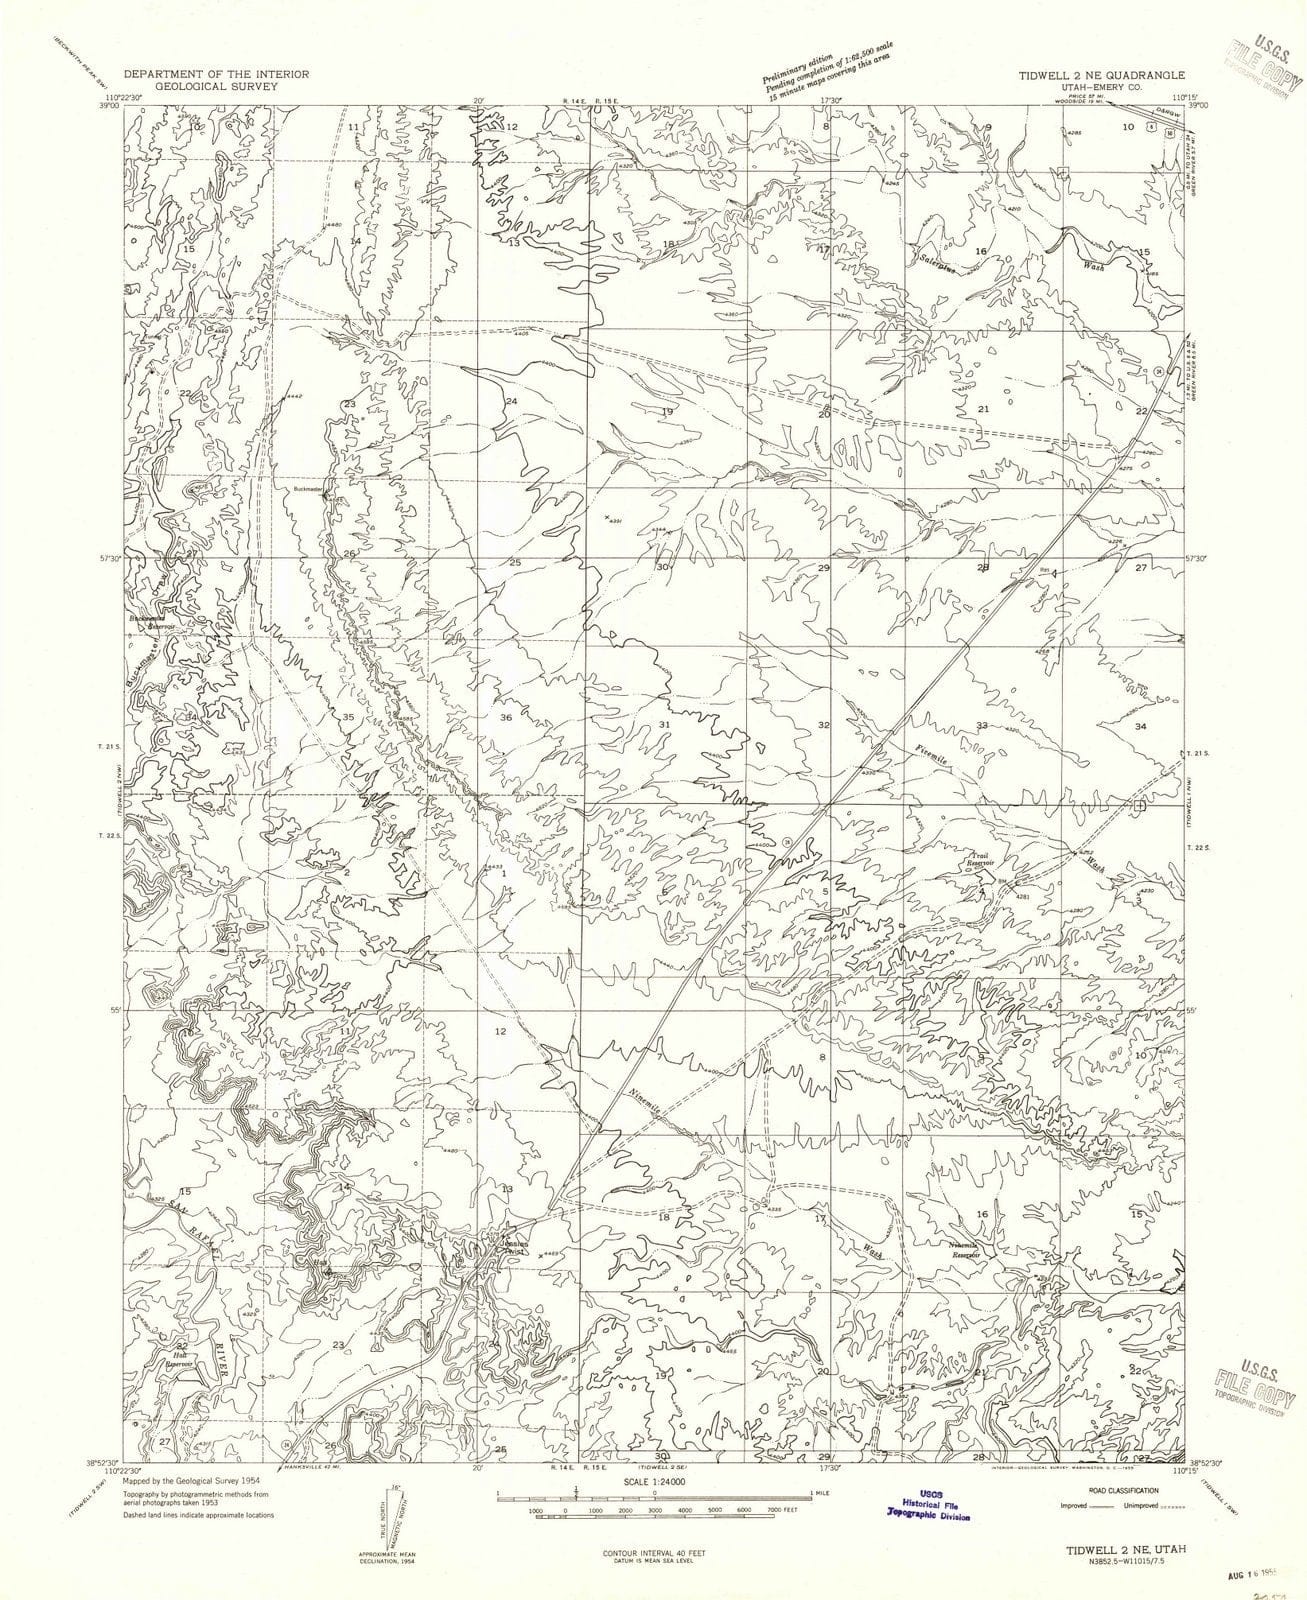 1954 Tidwell 2, UT - Utah - USGS Topographic Map